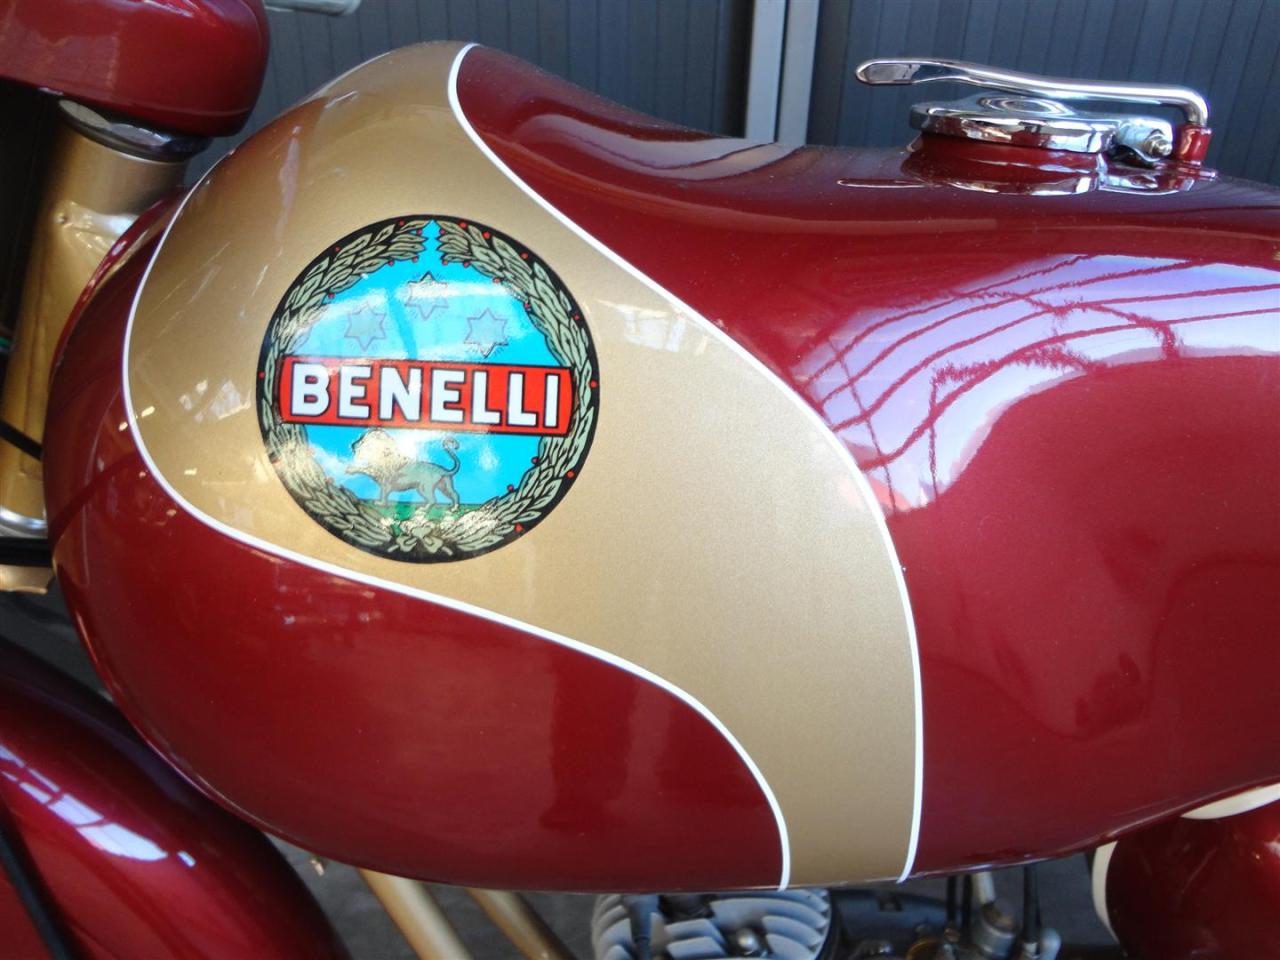 1950 Benelli Sprintmaster 50CC